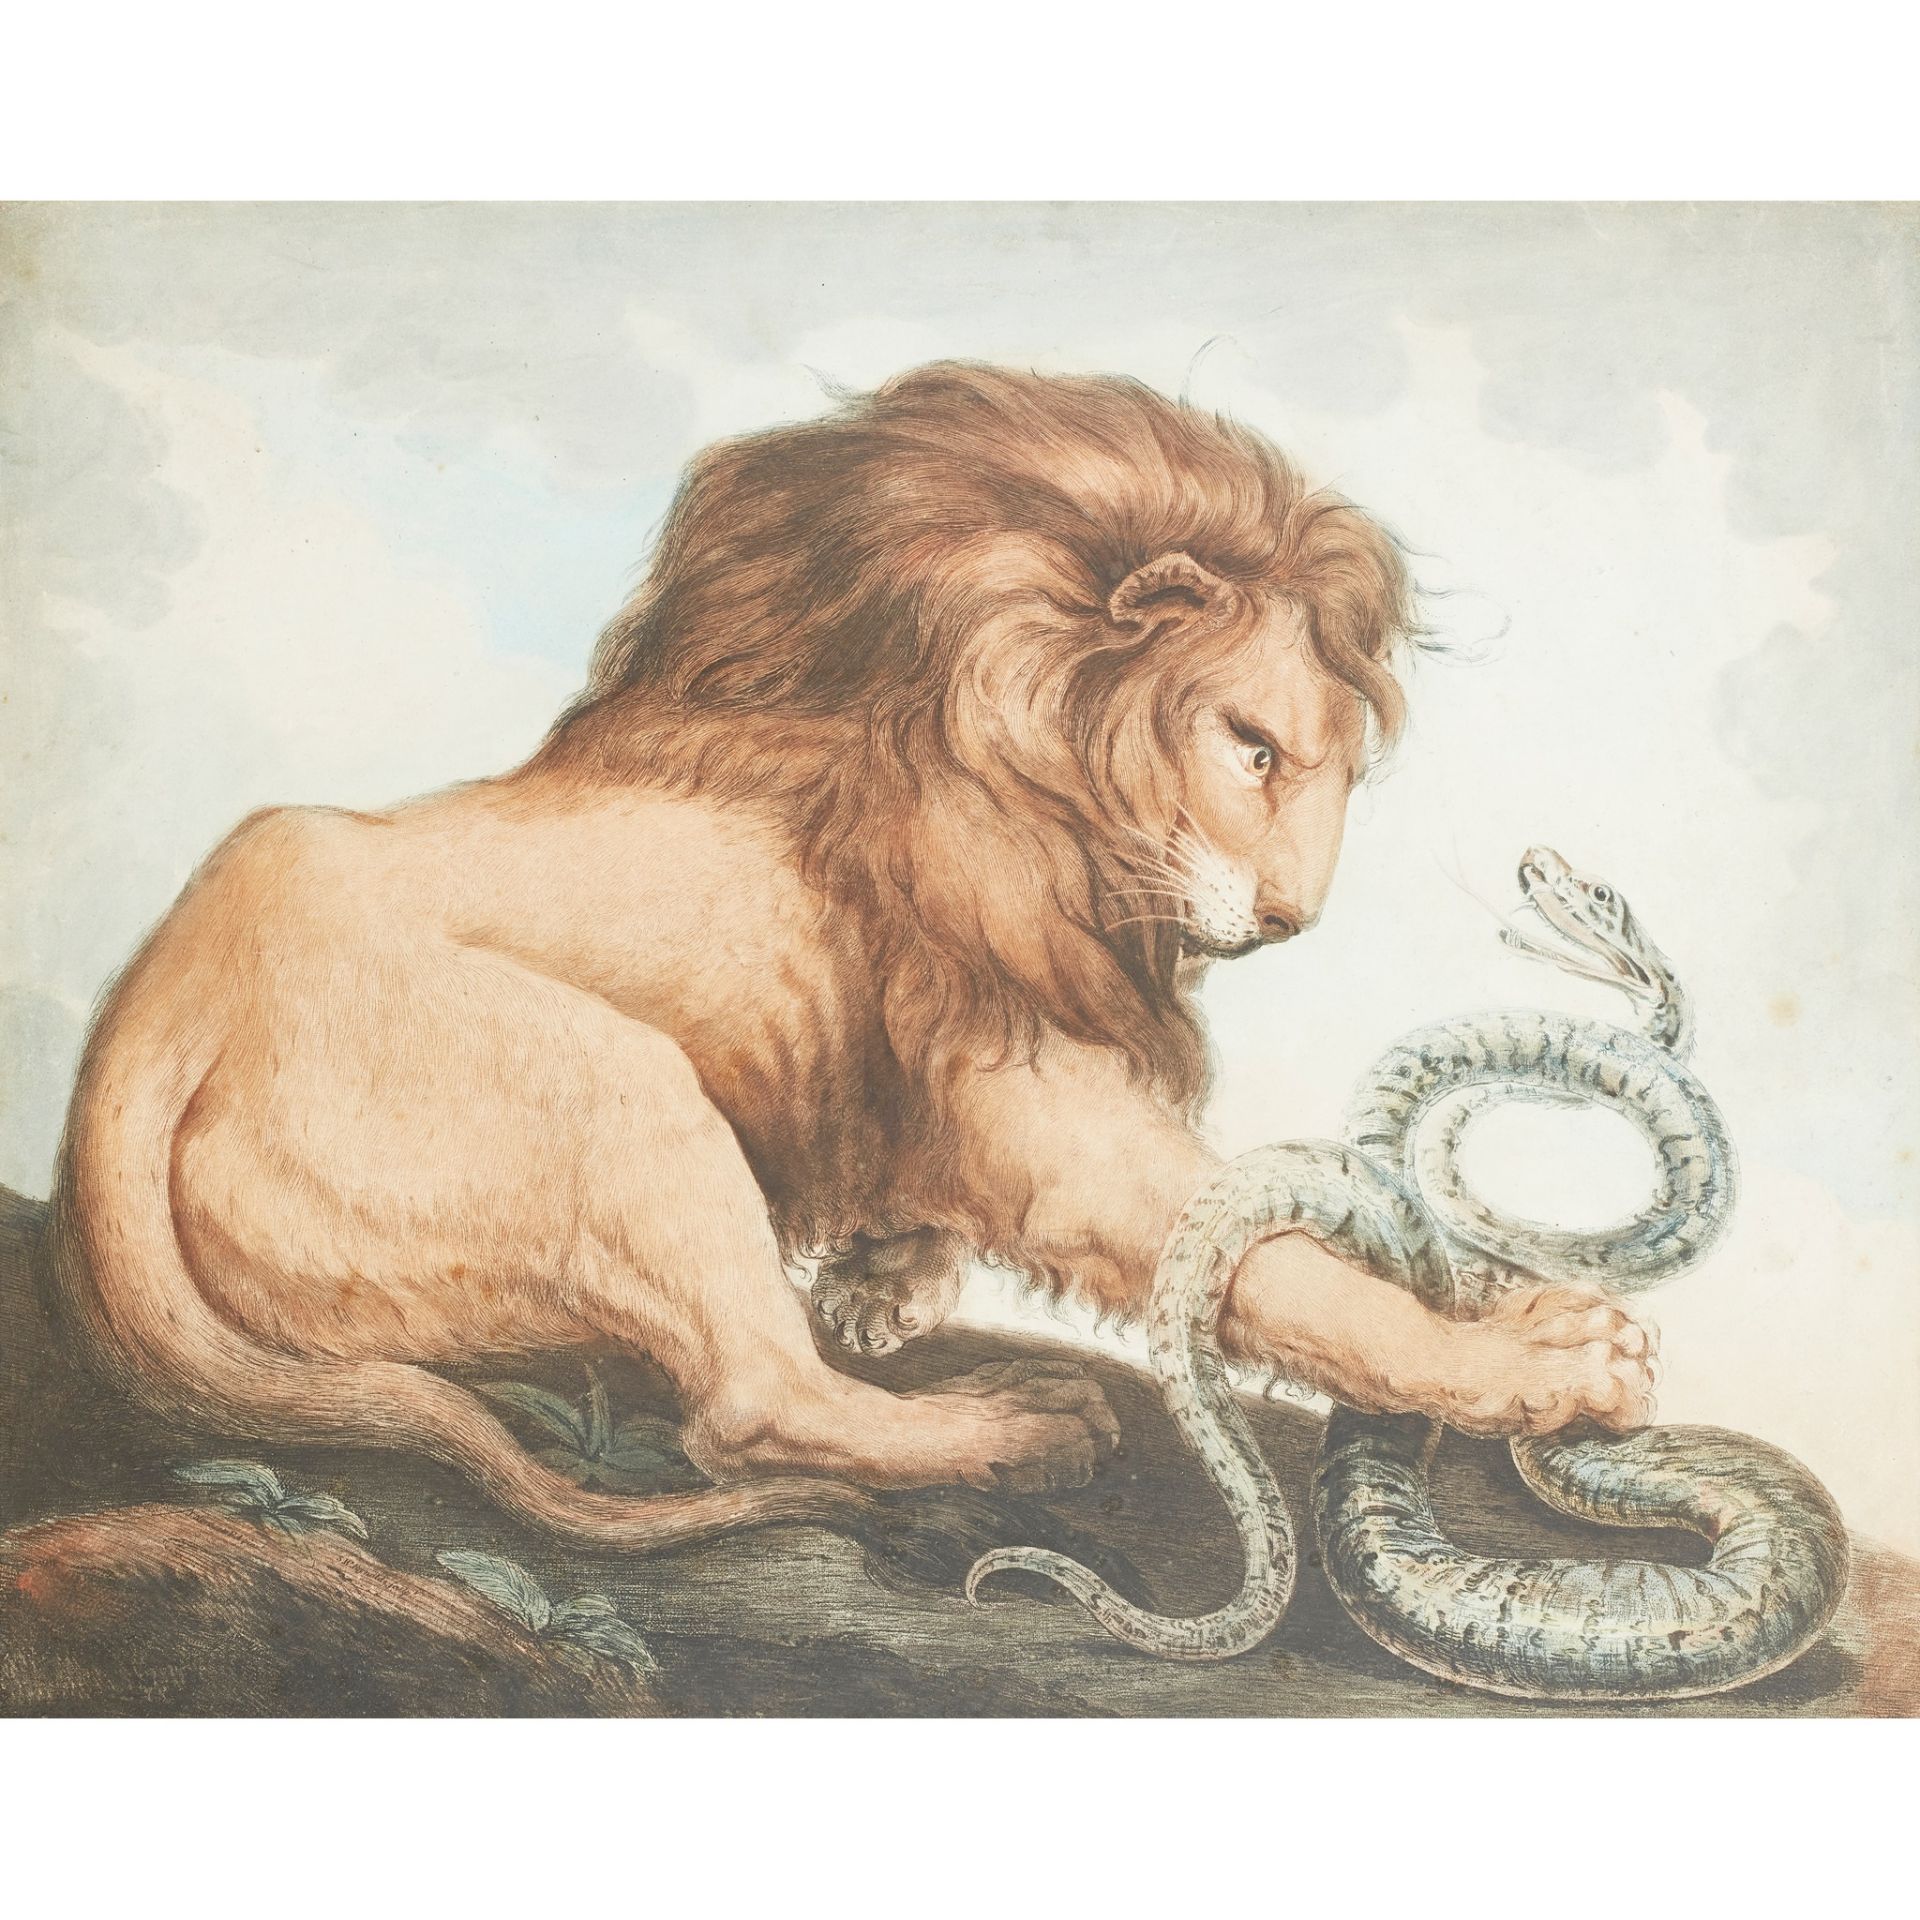 SAMUEL WILLIAM REYNOLDS (1773-1835), AFTER JAMES NORTHCOTE, R.A. LION AND SNAKE - Image 2 of 3